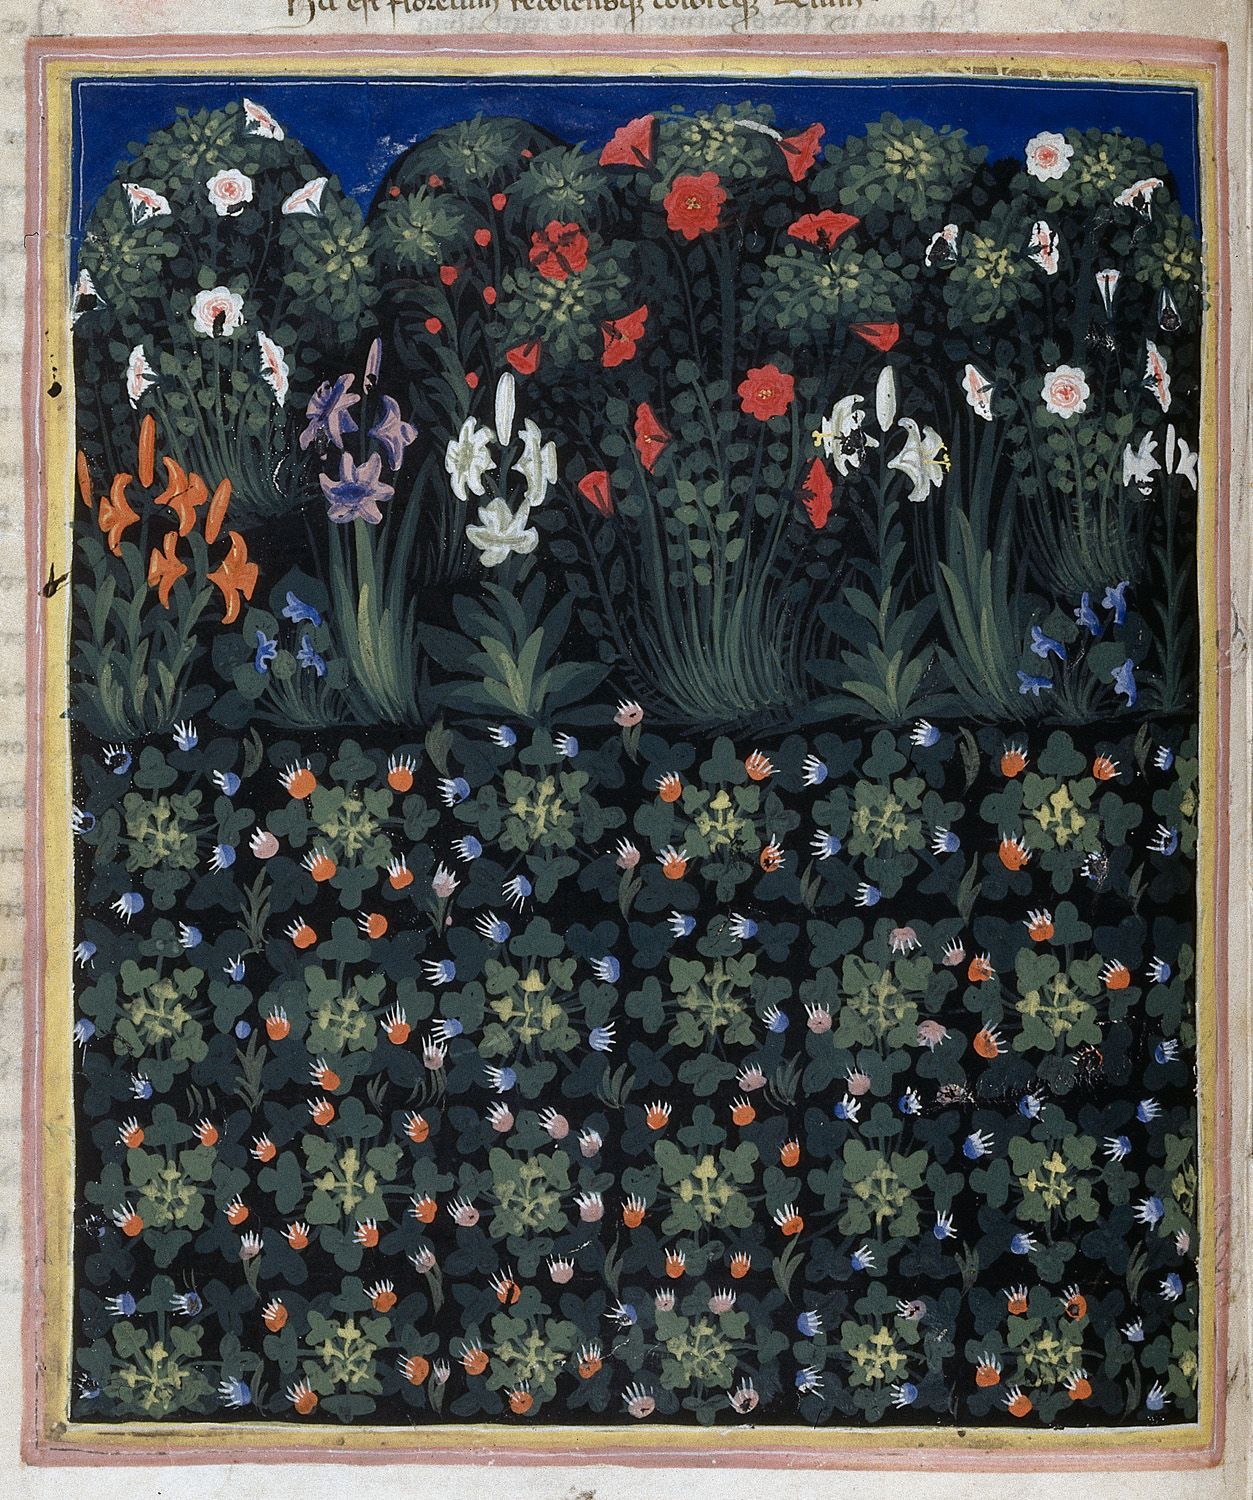 Garden by Pacino di Buonaguida - 1335-1340 - 49 x 35 cm British Library